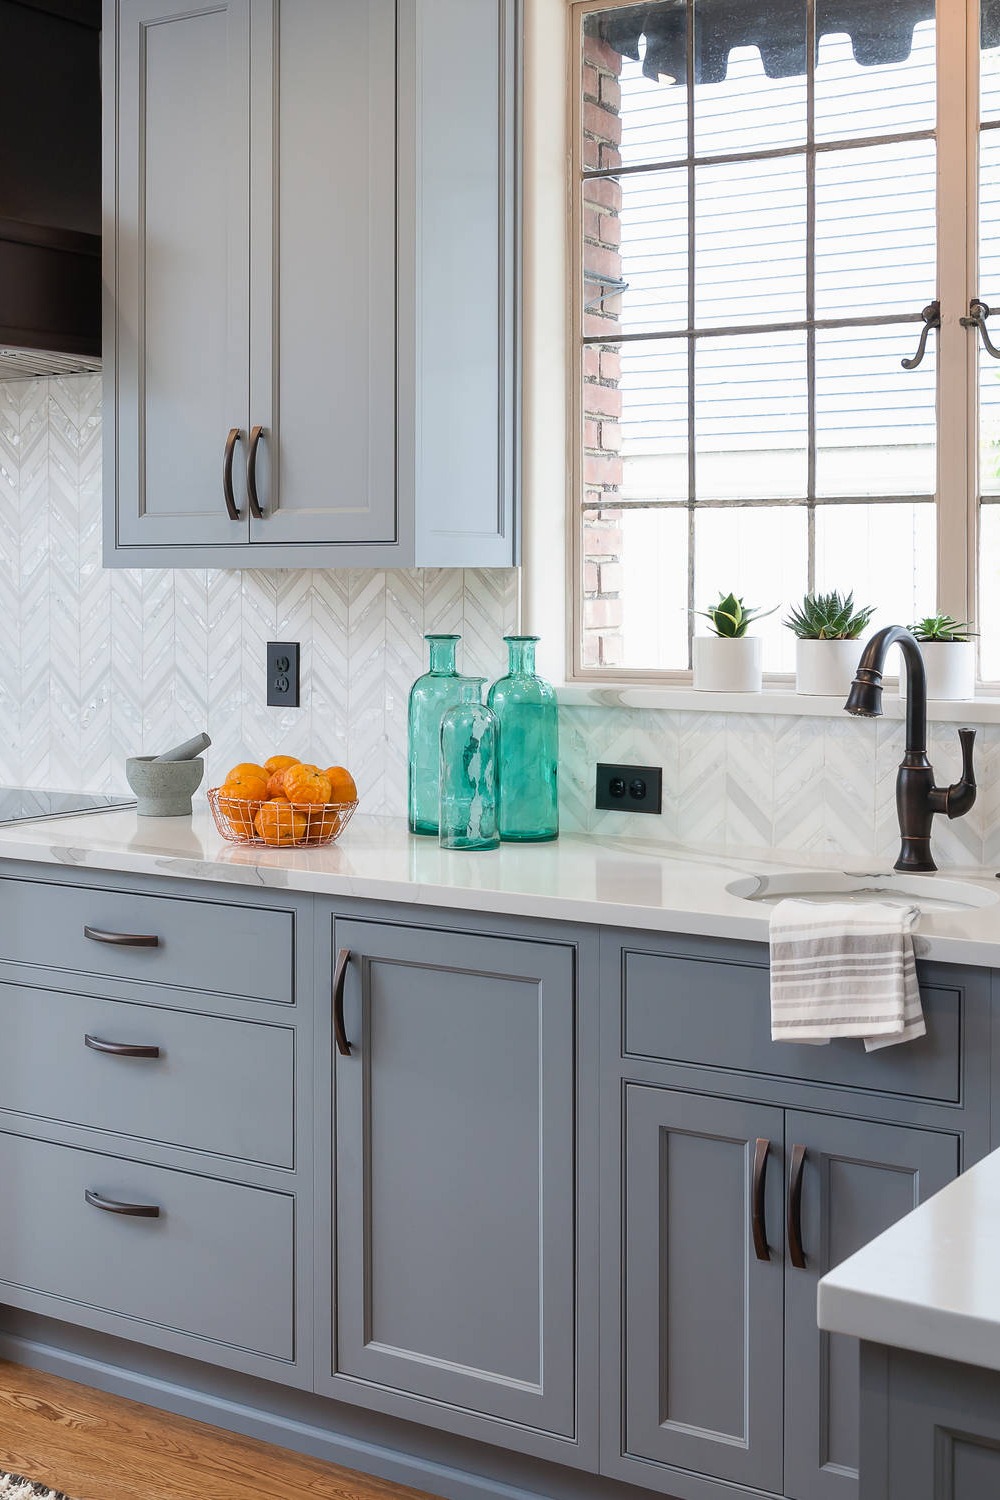 Perfect Kitchen Chevron Backsplash White Countertops Blue Cabinets Space Look Cart Color Finish Love